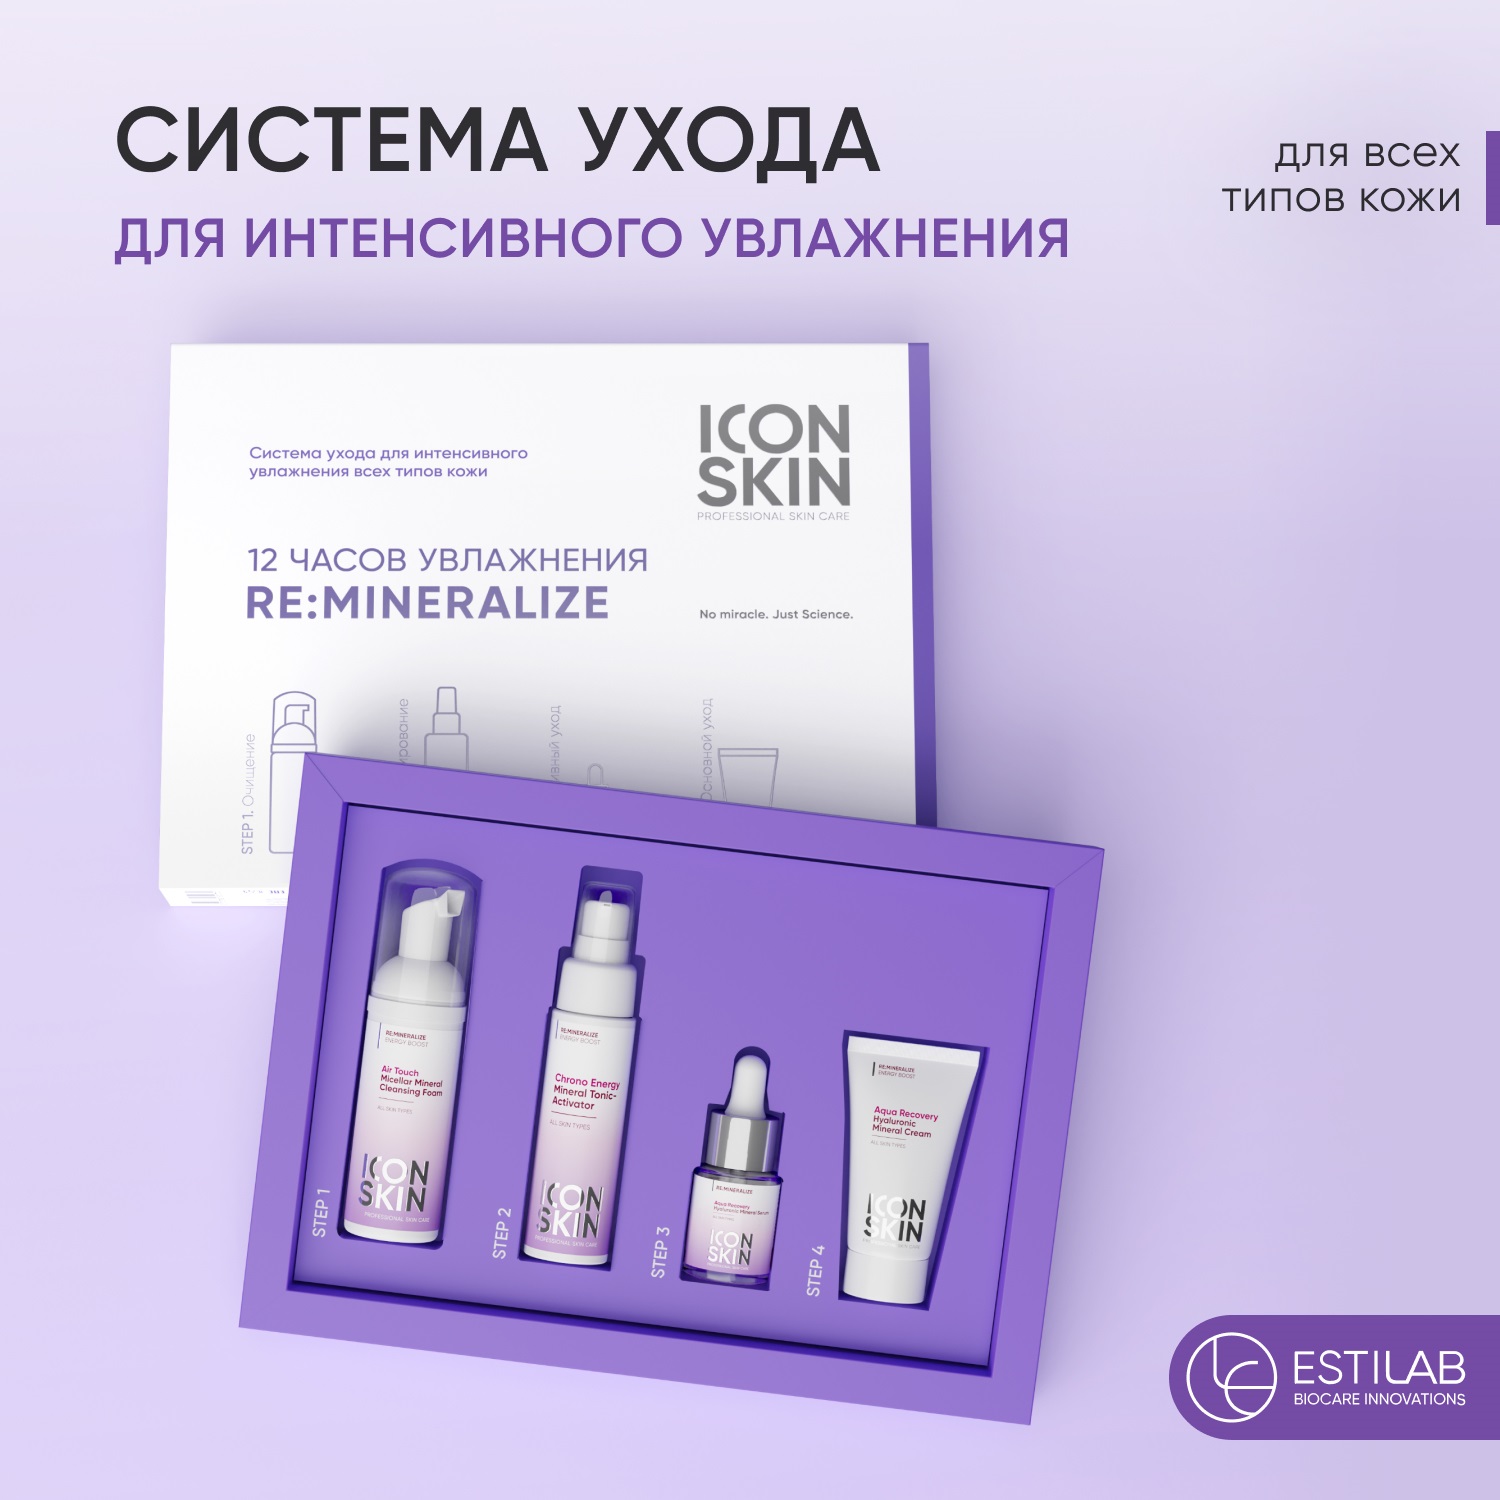 Icon Skin Набор для интенсивного увлажнения кожи лица, 4 мини-средства. фото